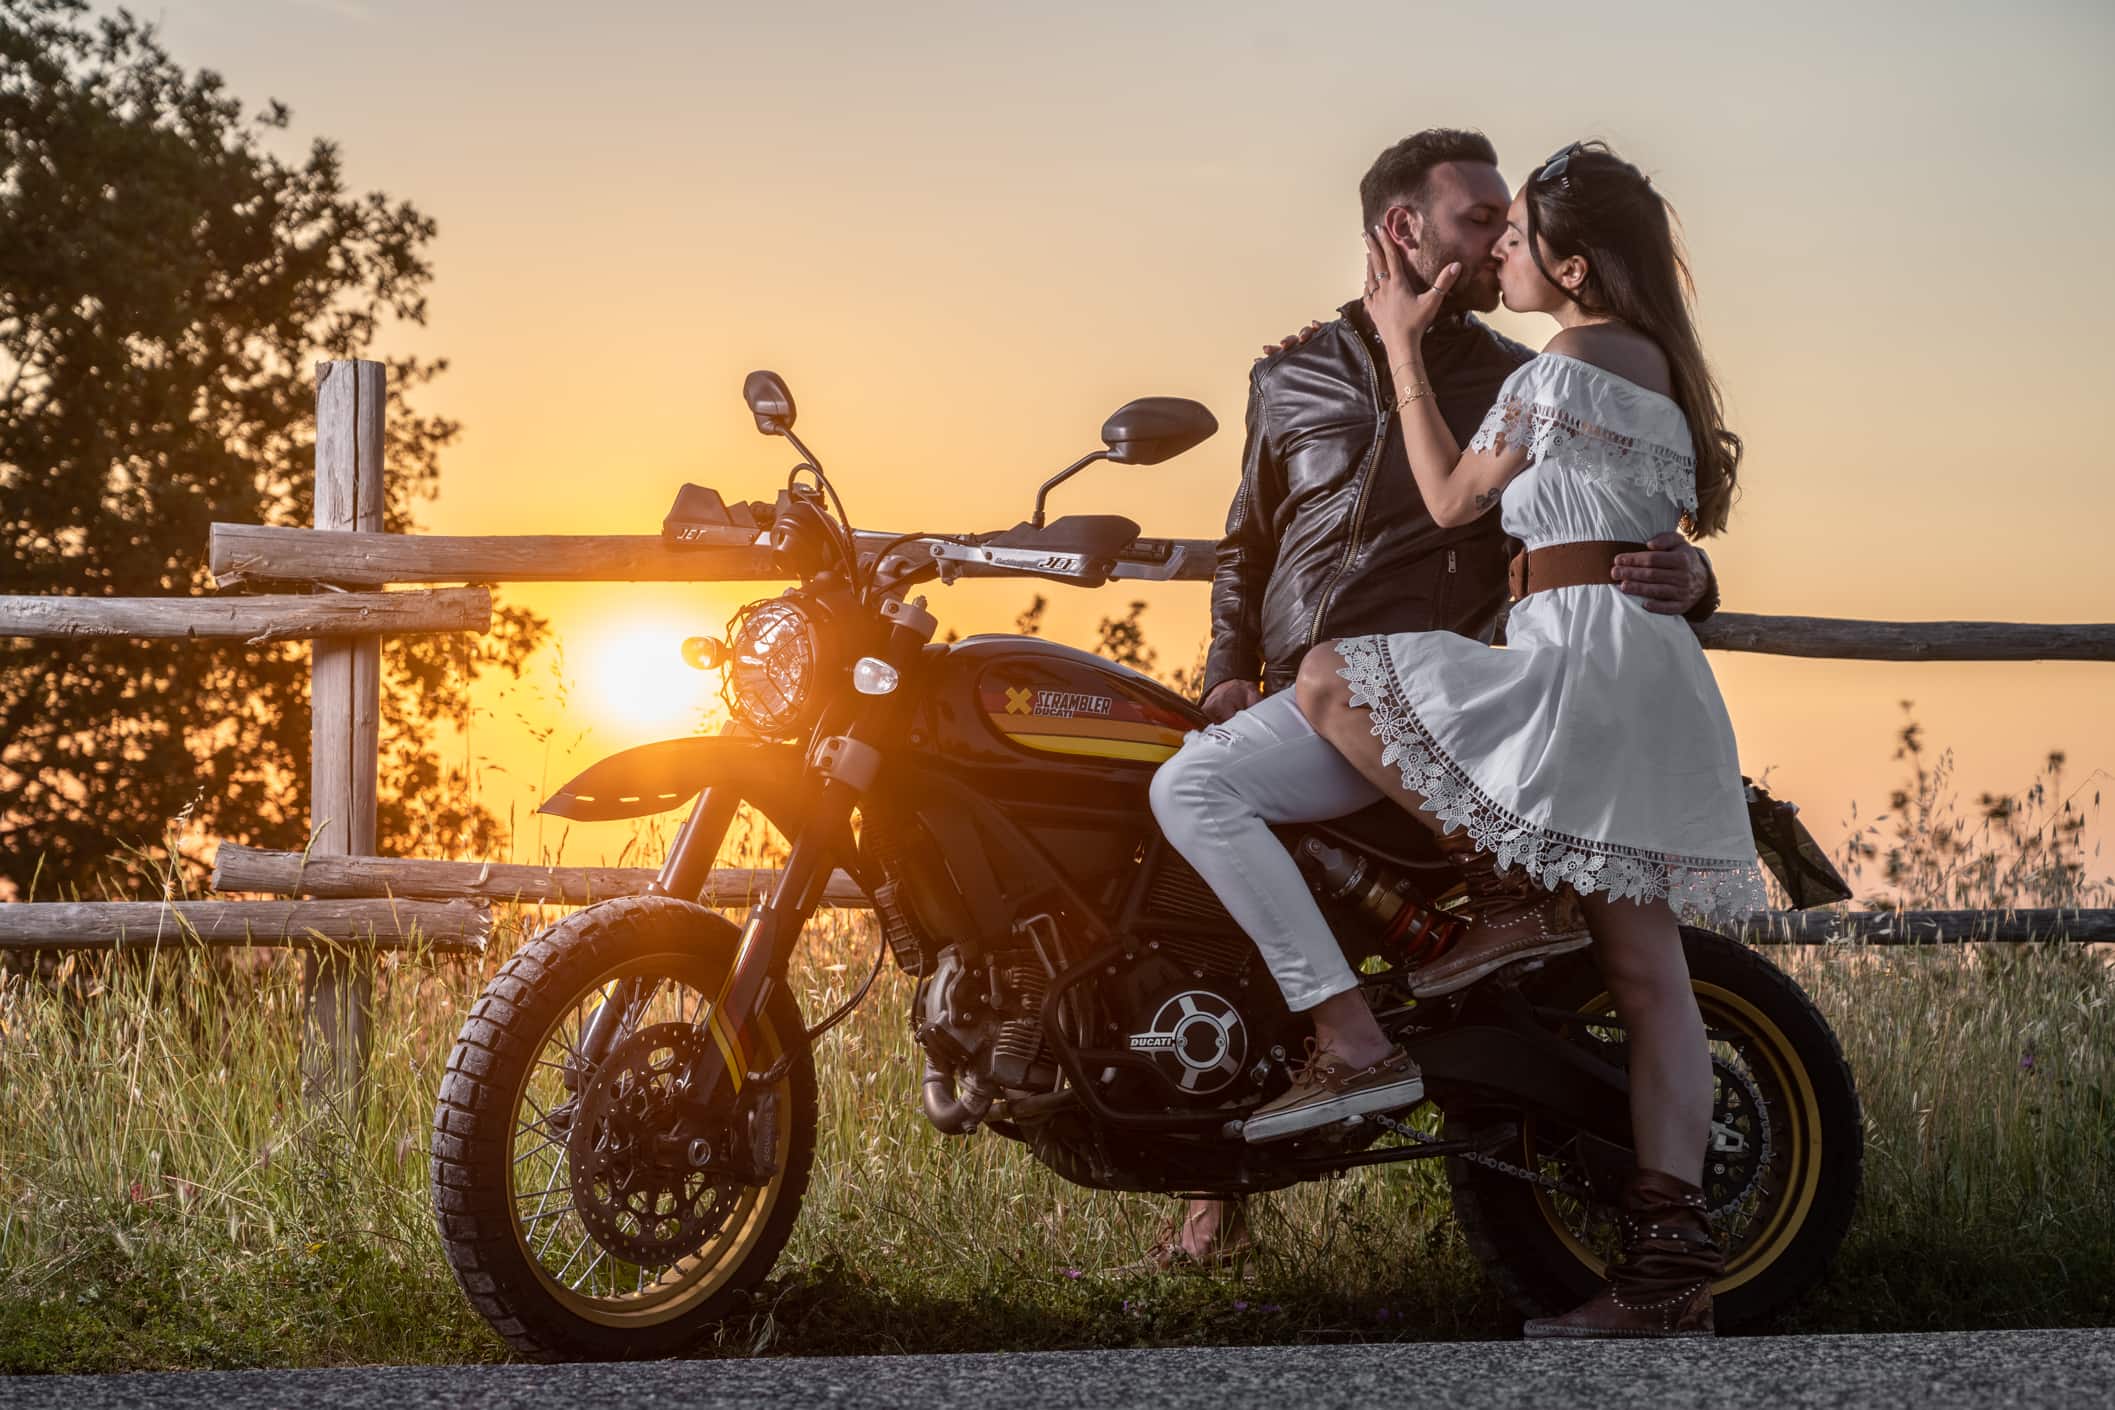 lorenzo-cristina-prematrimoniale-motocicletta-fotografo-matrimonio-milano-2